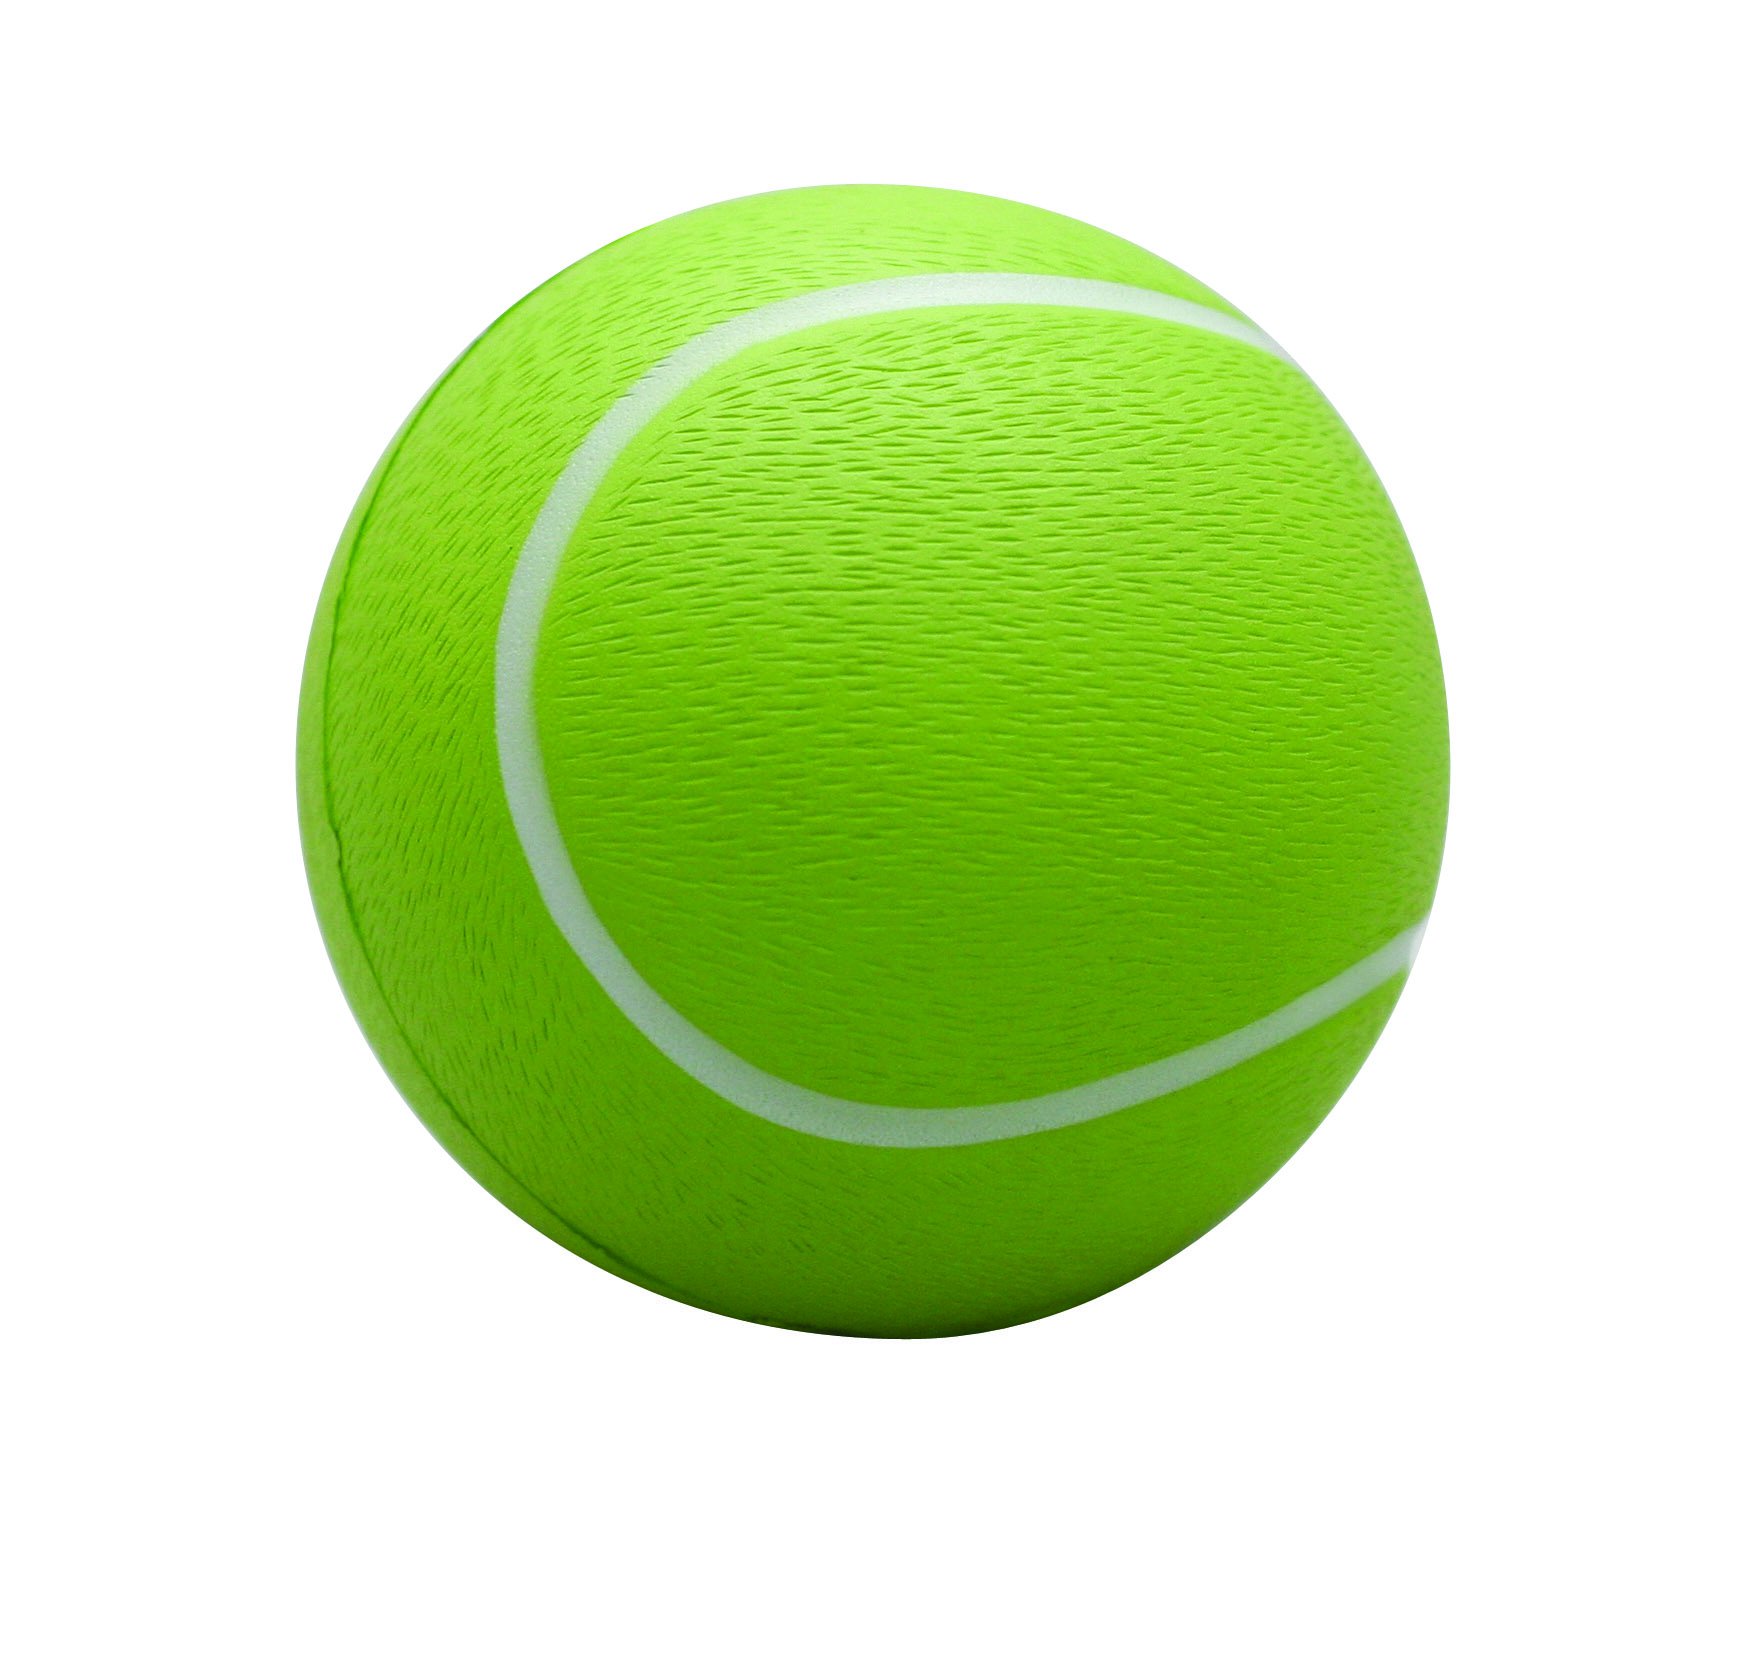 Tennis ball clipart no background